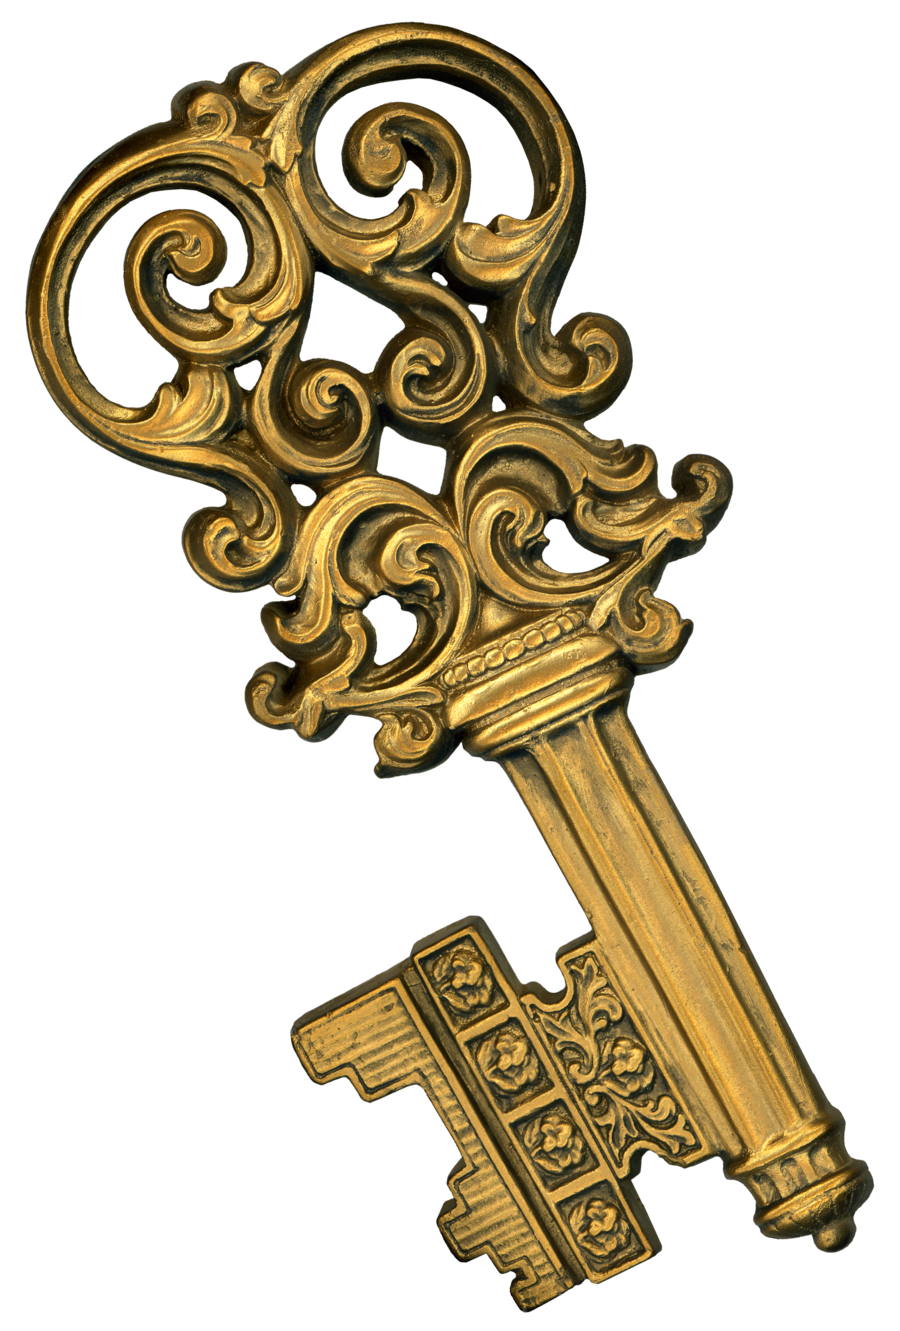 Keys picture. Старинный ключ. Золотой ключ. Красивые ключи. Красивый старинный ключ.